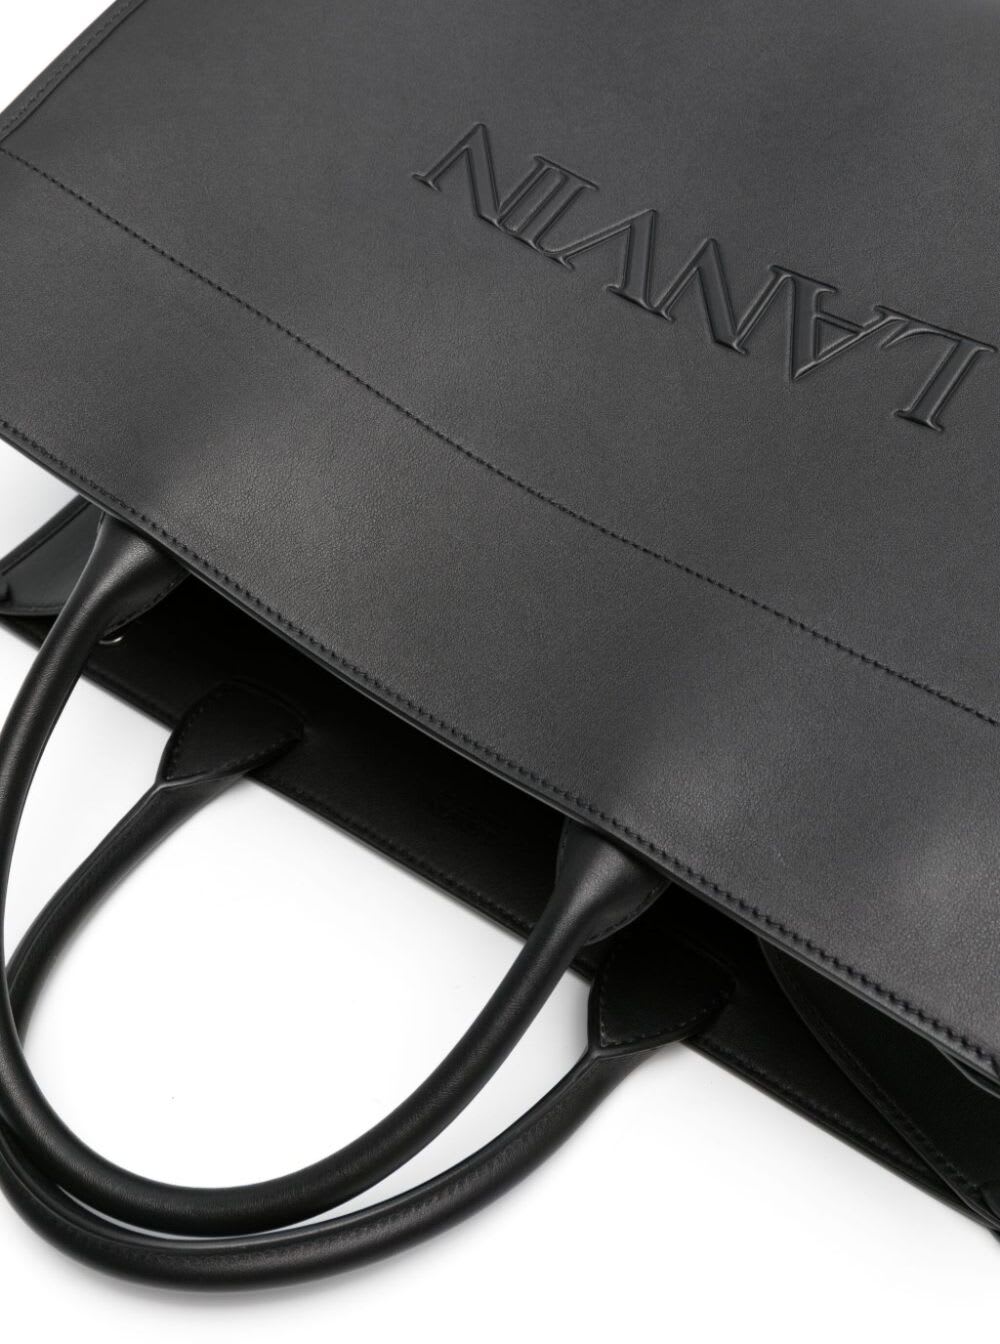 Shop Lanvin Tote Bag Mm With Strap In Black